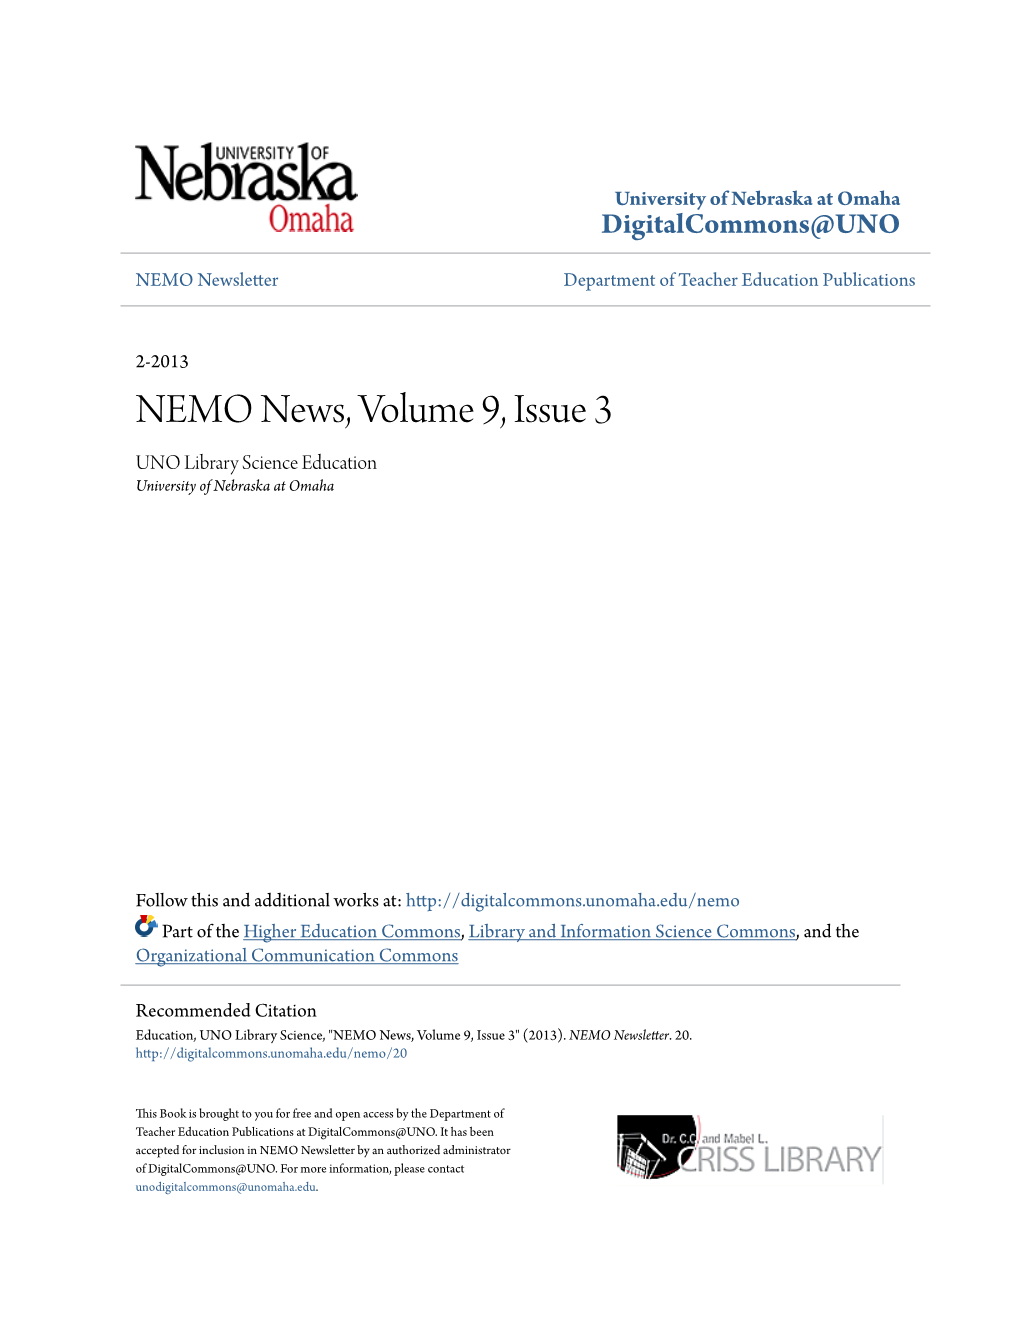 NEMO News, Volume 9, Issue 3 UNO Library Science Education University of Nebraska at Omaha